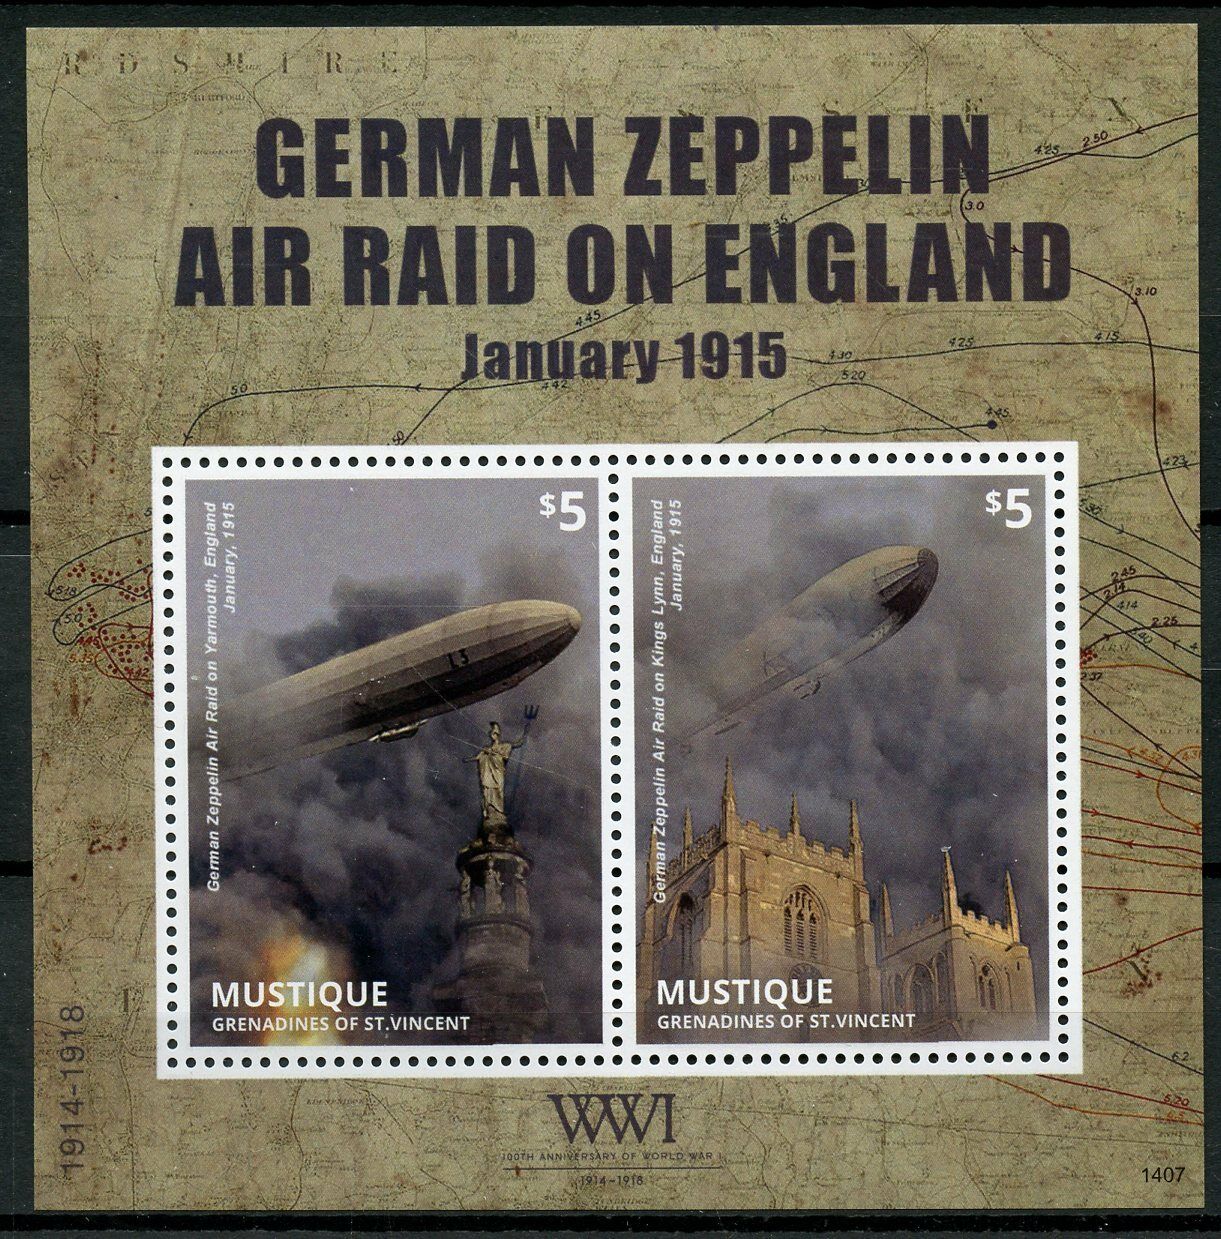 Mustique Gren St Vincent Military Stamps 2014 MNH WWI WW1 German Zeppelin 2v S/S